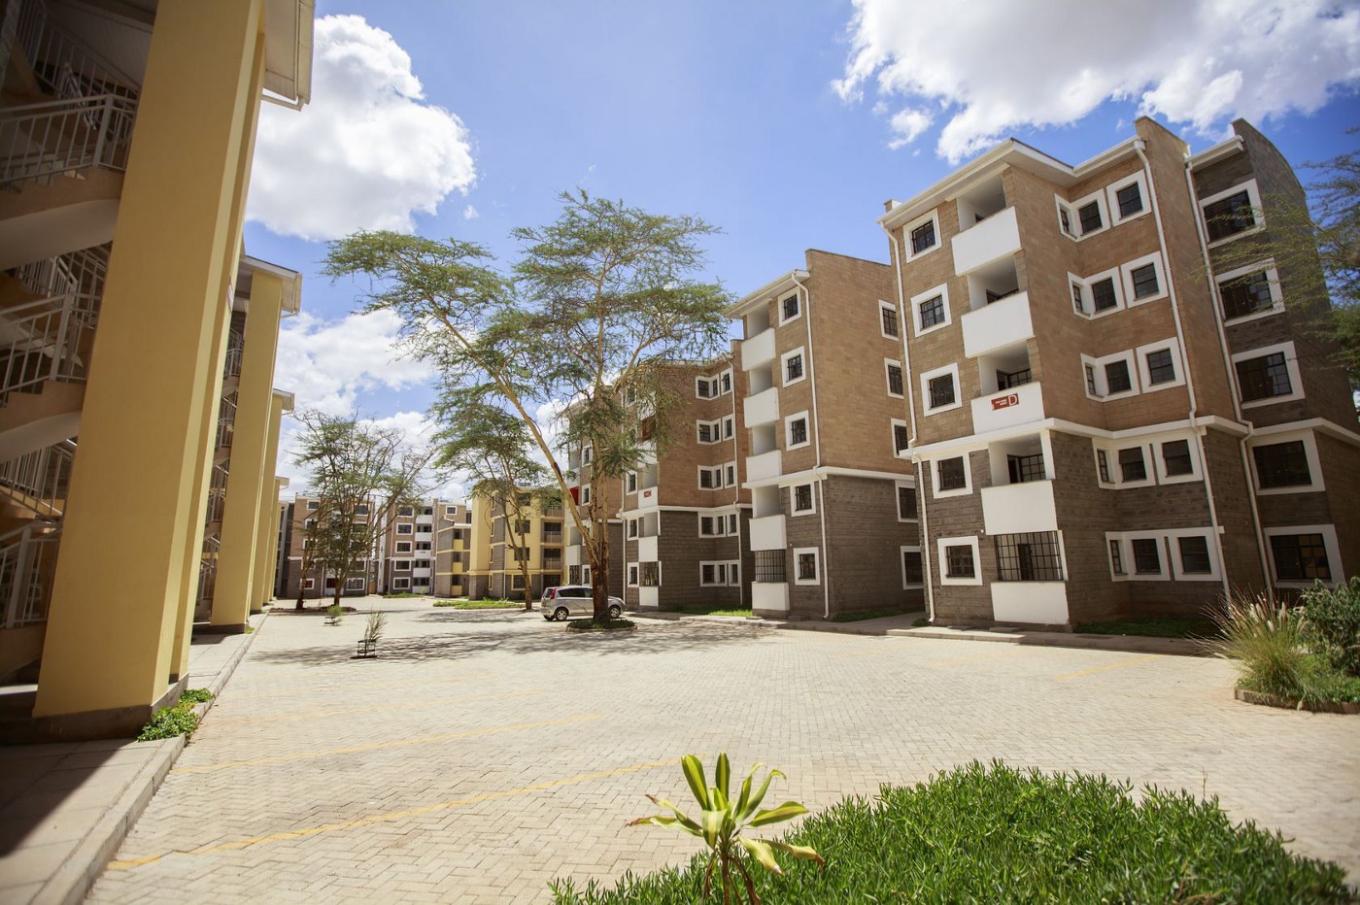 Housing in Kenya